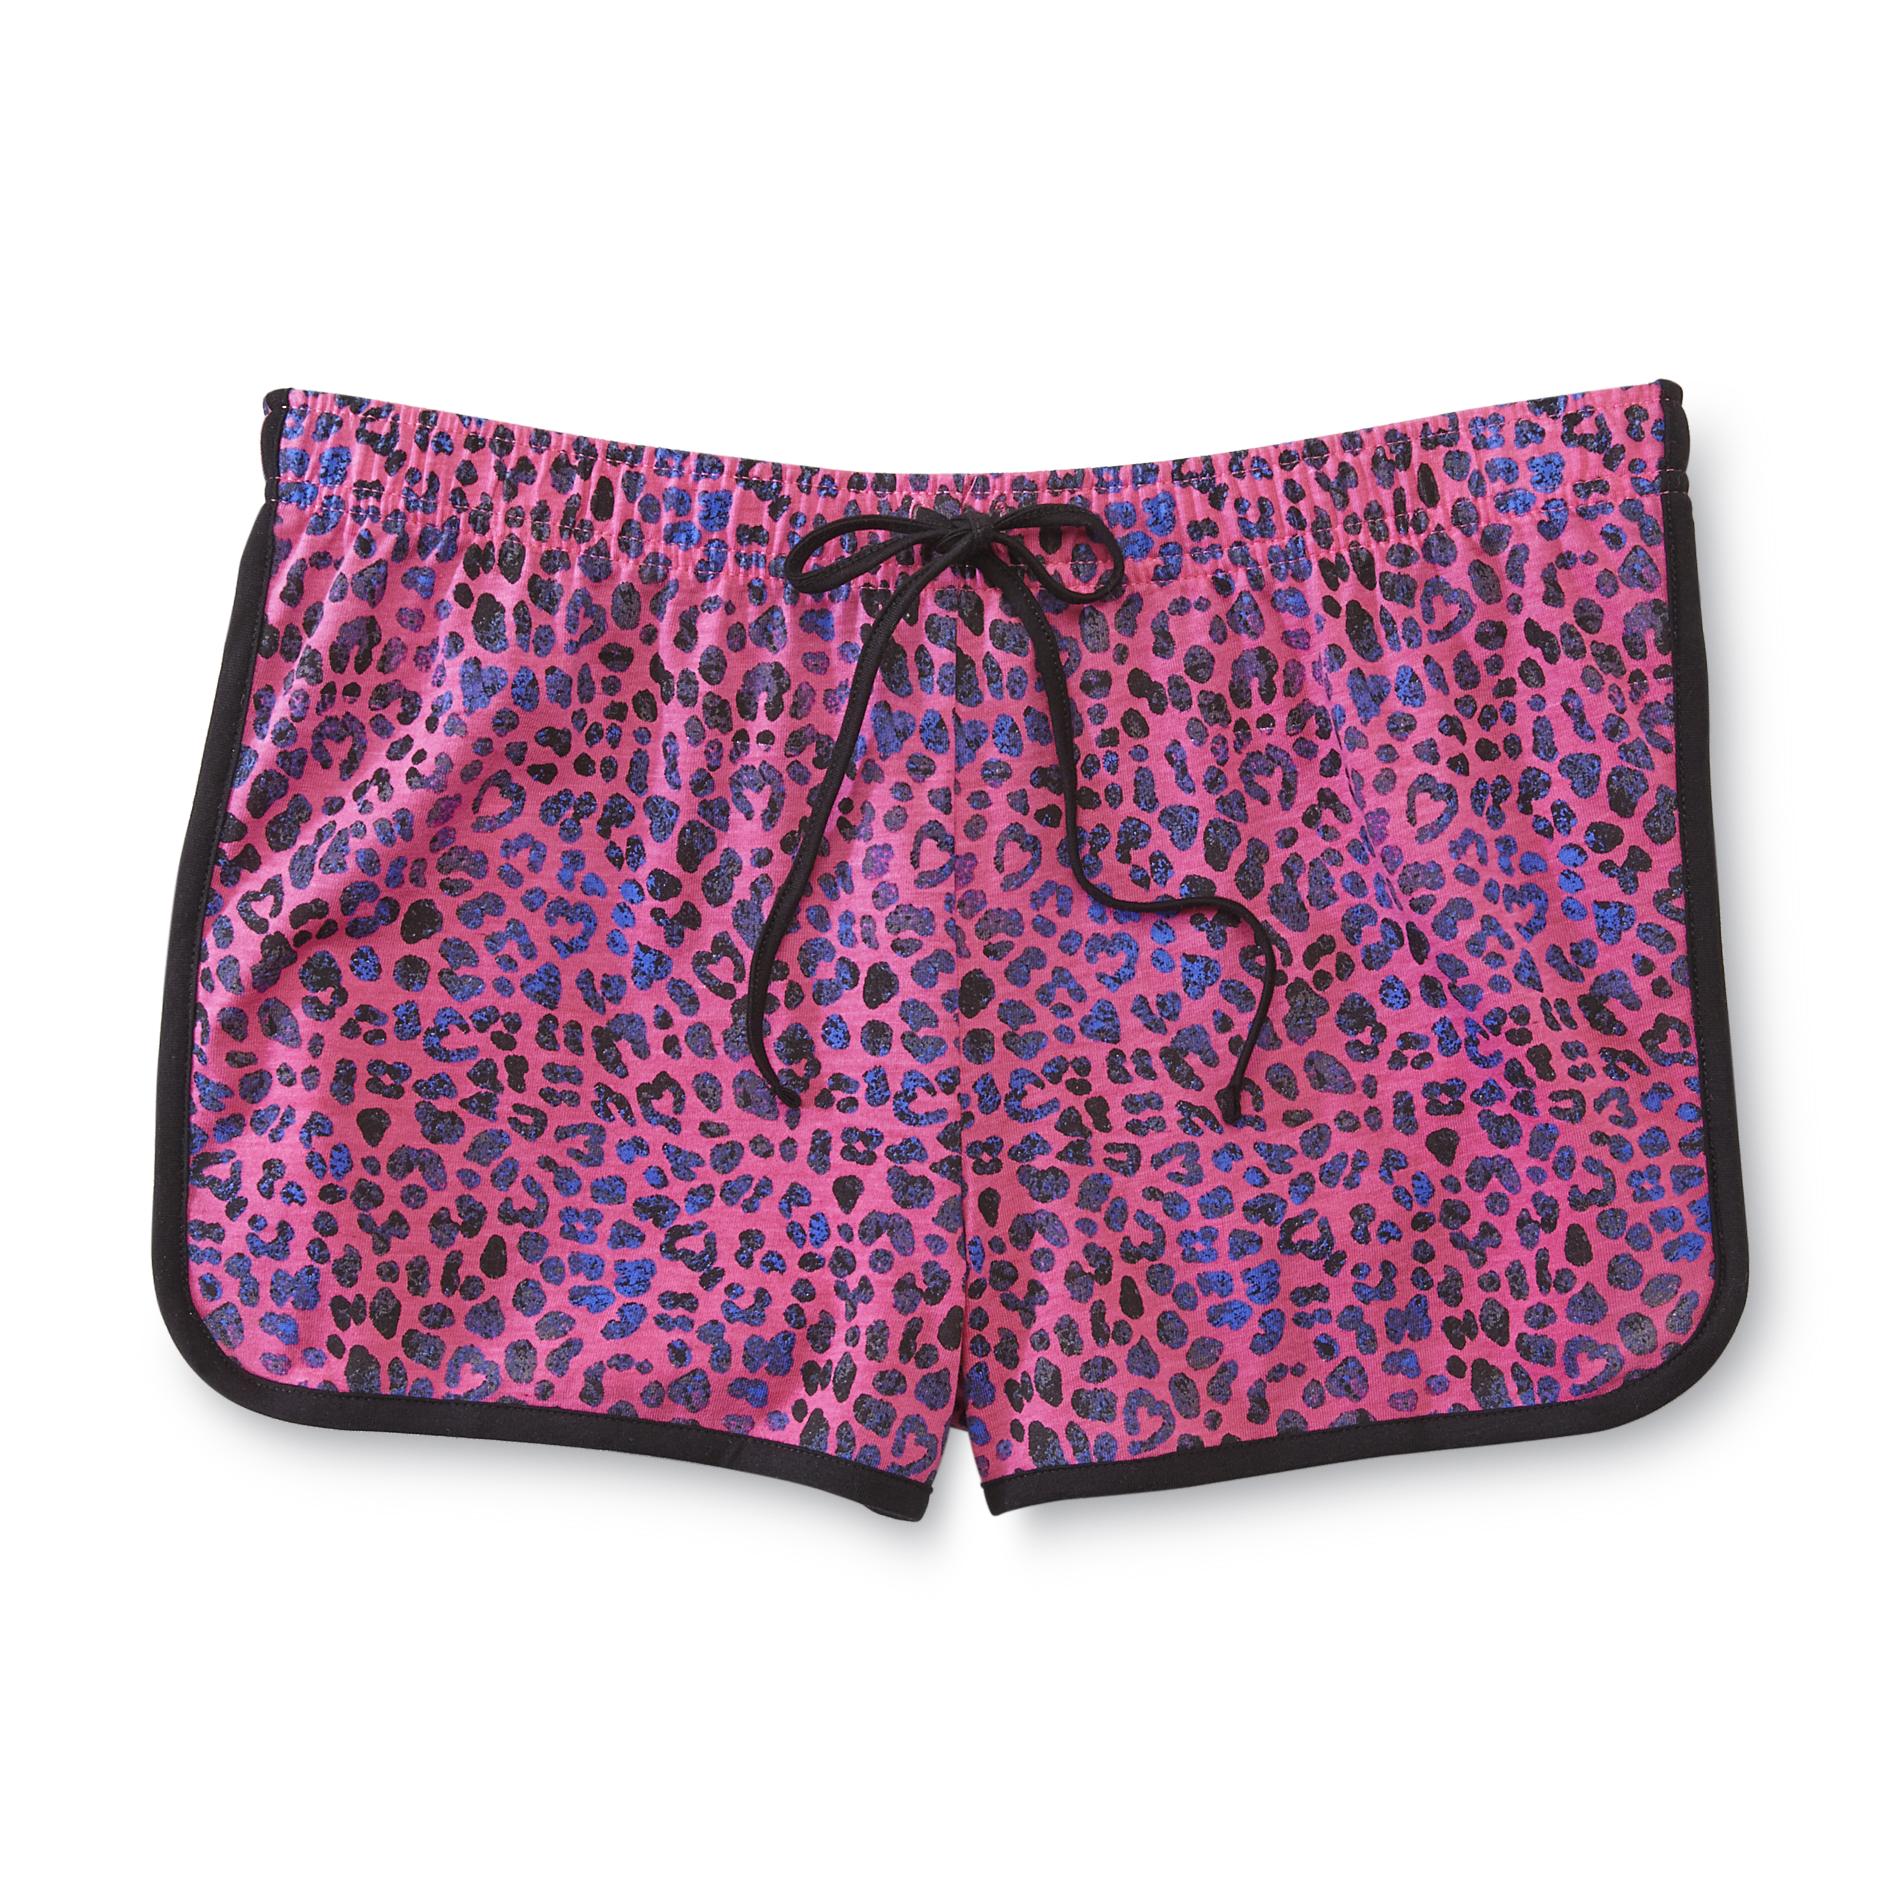 Joe Boxer Junior's Knit Dolphin Shorts - Leopard Print